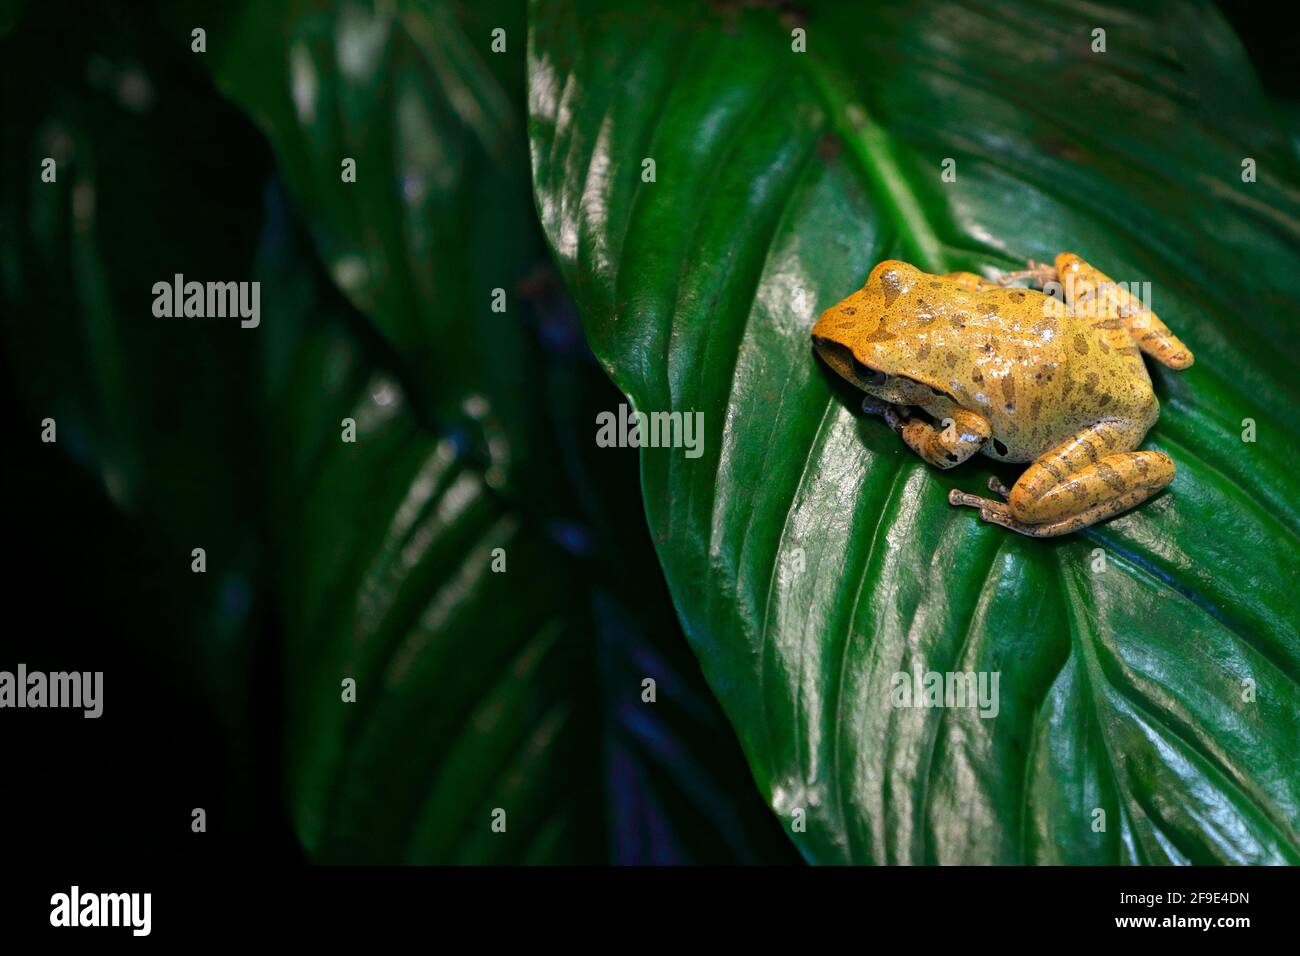 Polypedates megacephalus, Spot-legged Hong Kong Whipping Frog in the forest habitat. Frog sitting on the green leave. Asian Amphibian, green vegetatio Stock Photo